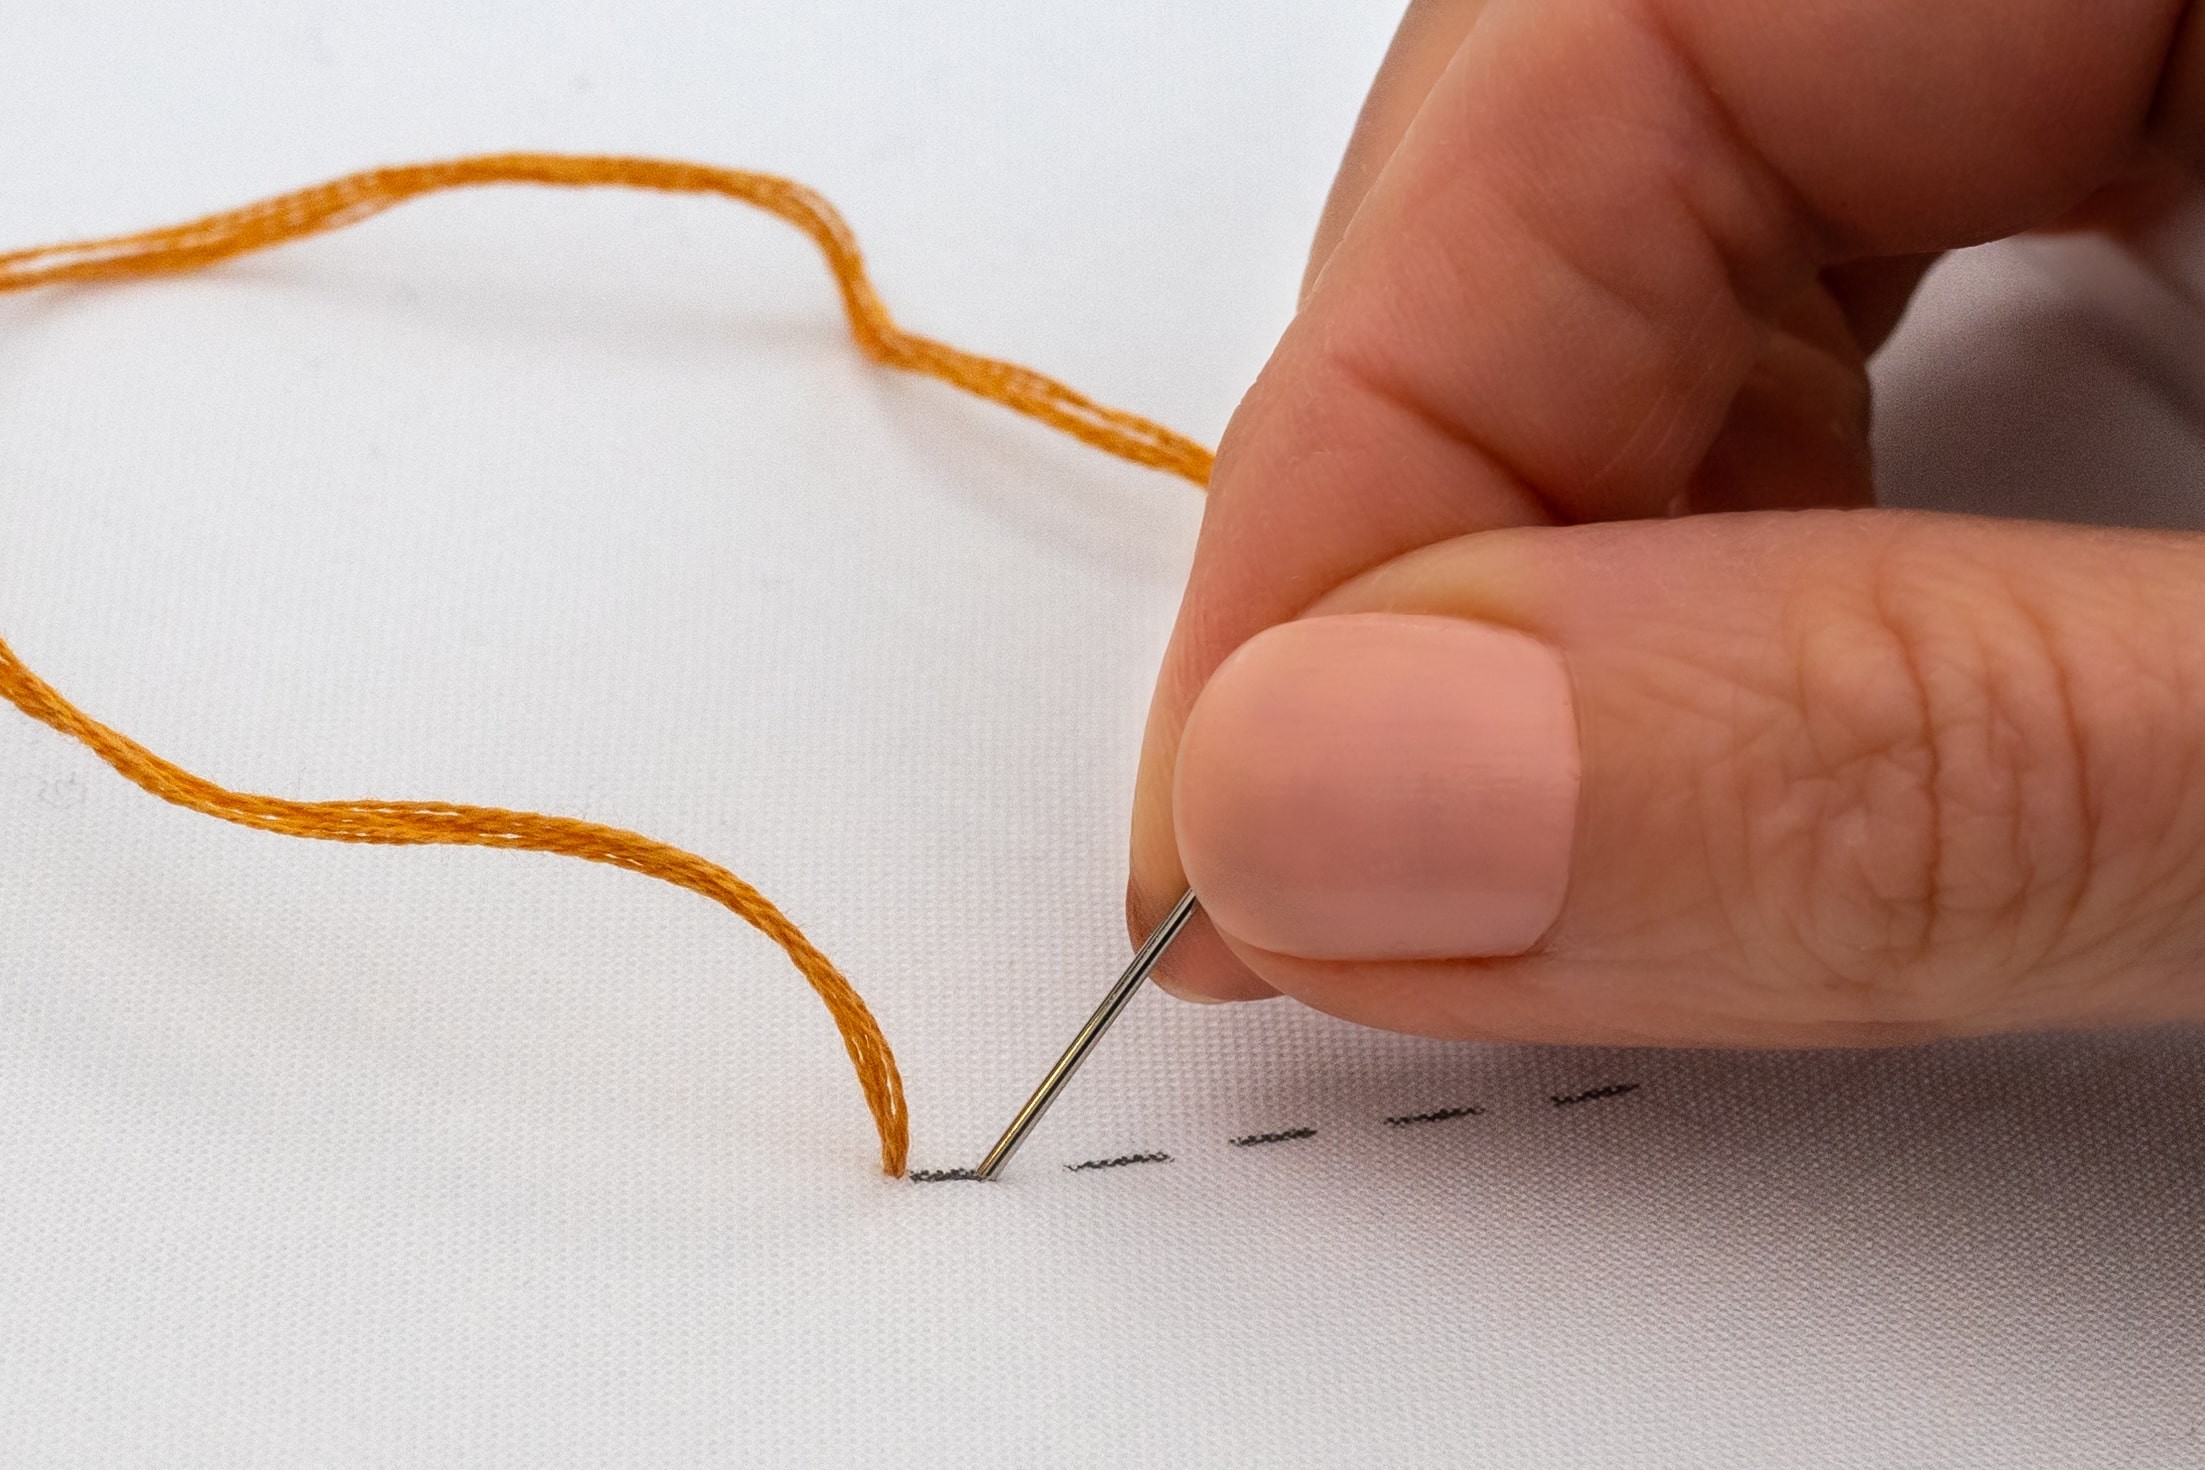 A needle pokes down a stitch length ahead.